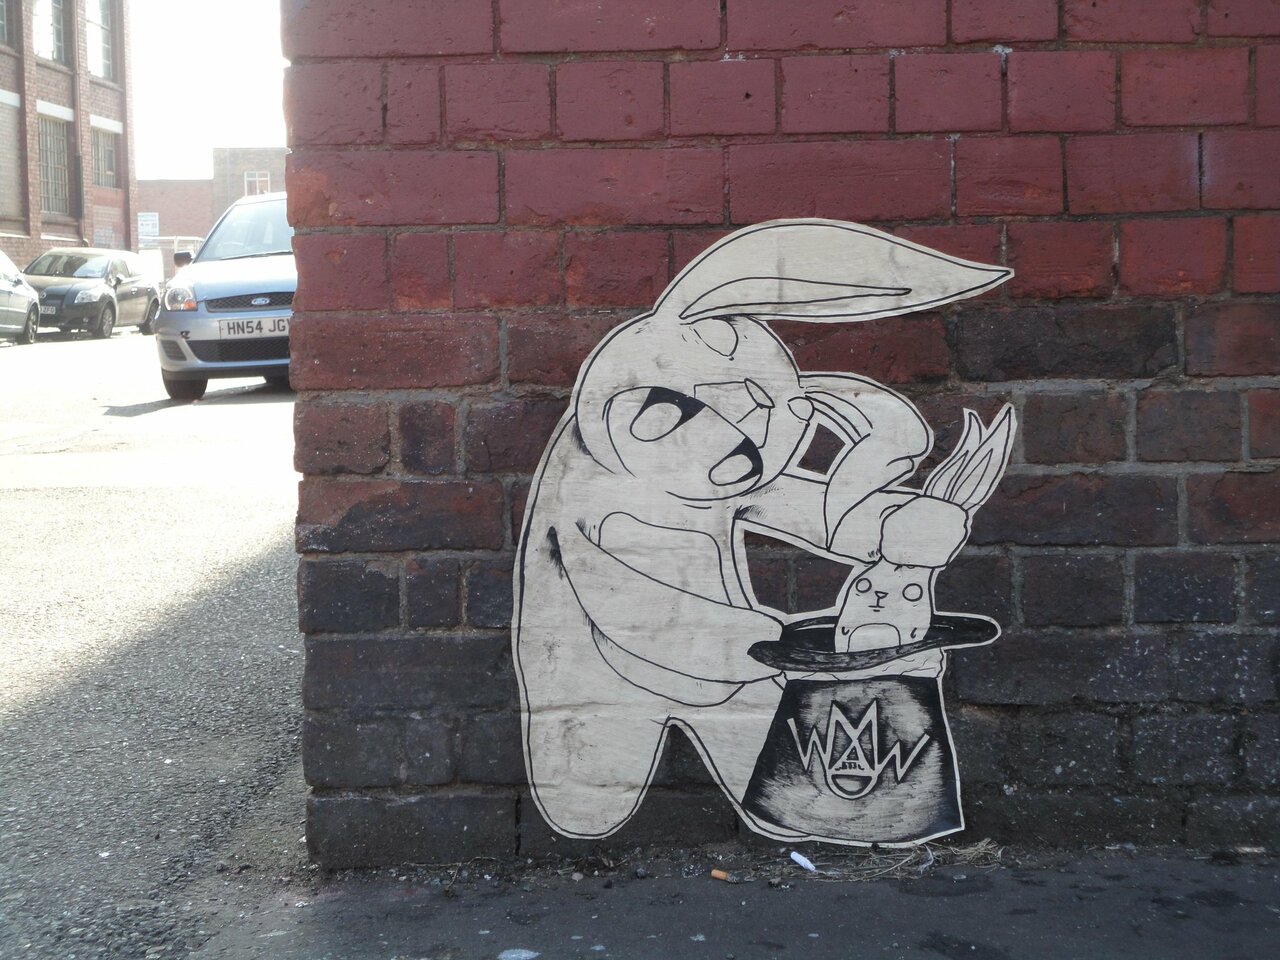 Mad Wew magicing rabbits out of a hat all down Bradford St, #Digbeth

#art #arte #streetart #graffiti #Birmingham http://t.co/TPUydjYCgZ